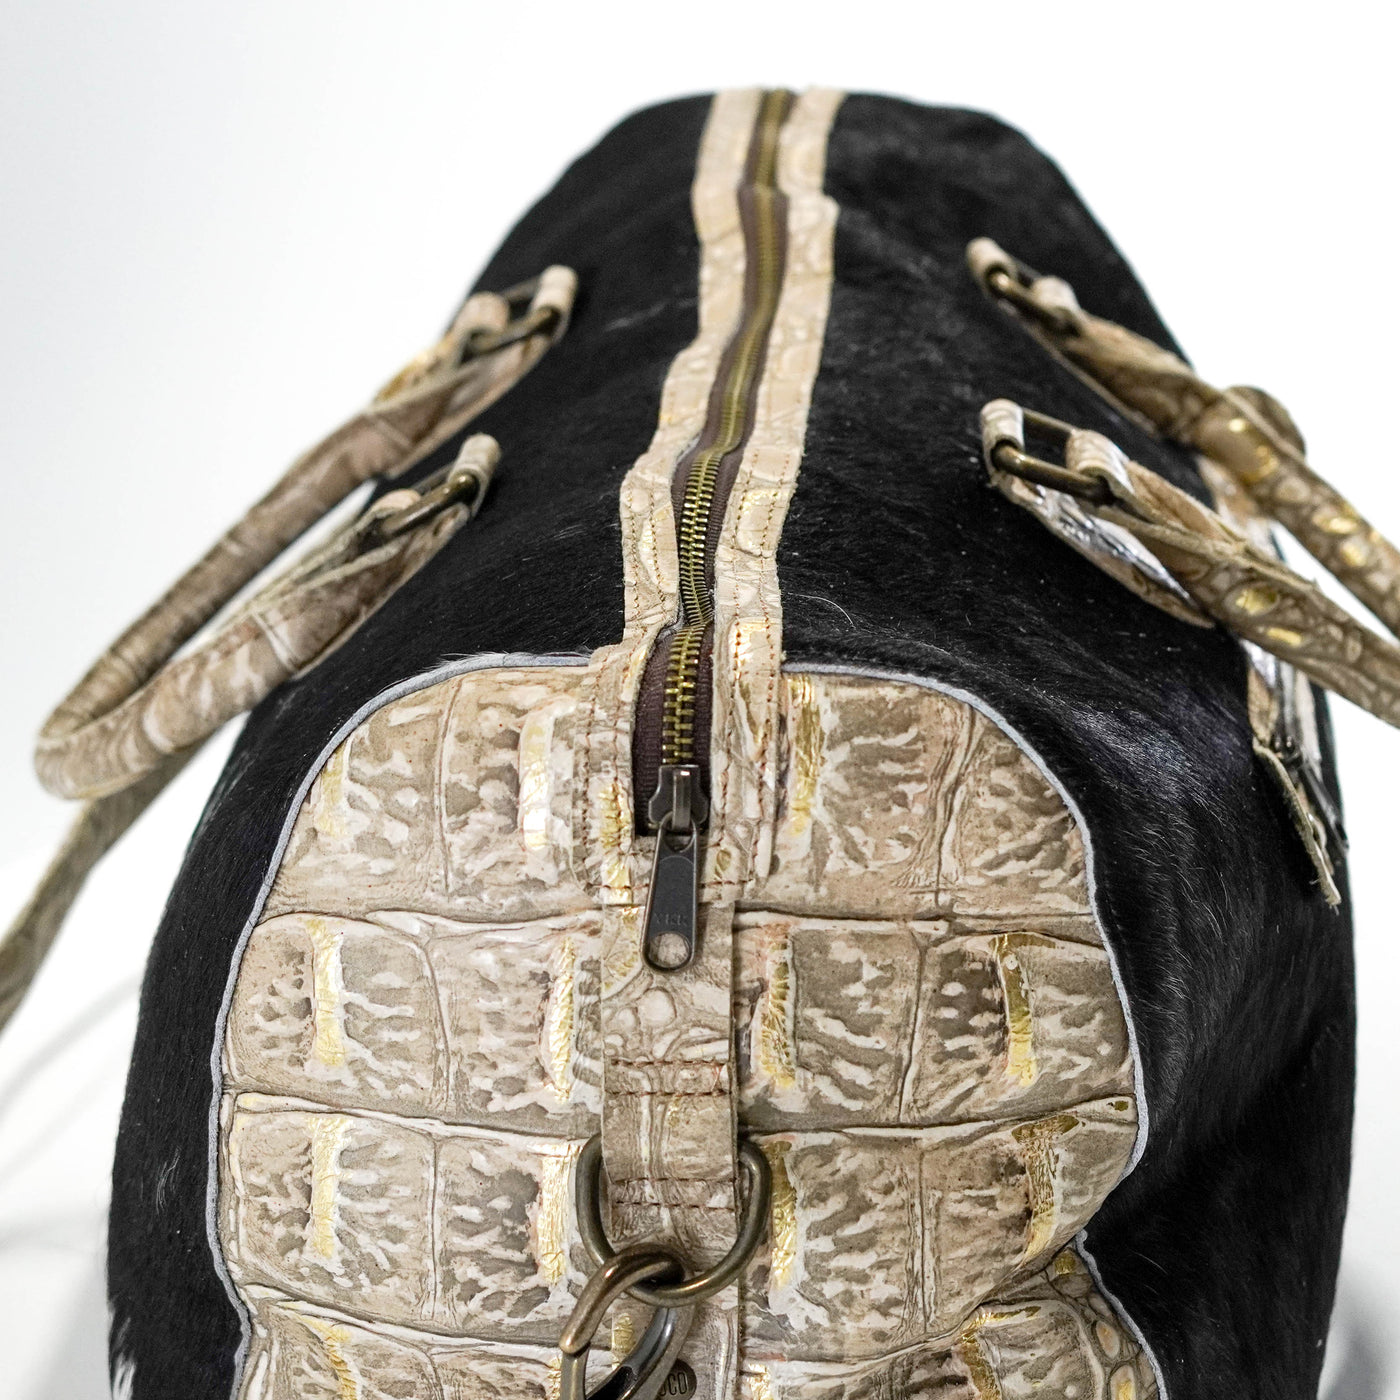 Duffel - Black & White w/ Ivory Jumbo Croc-Duffel-Western-Cowhide-Bags-Handmade-Products-Gifts-Dancing Cactus Designs